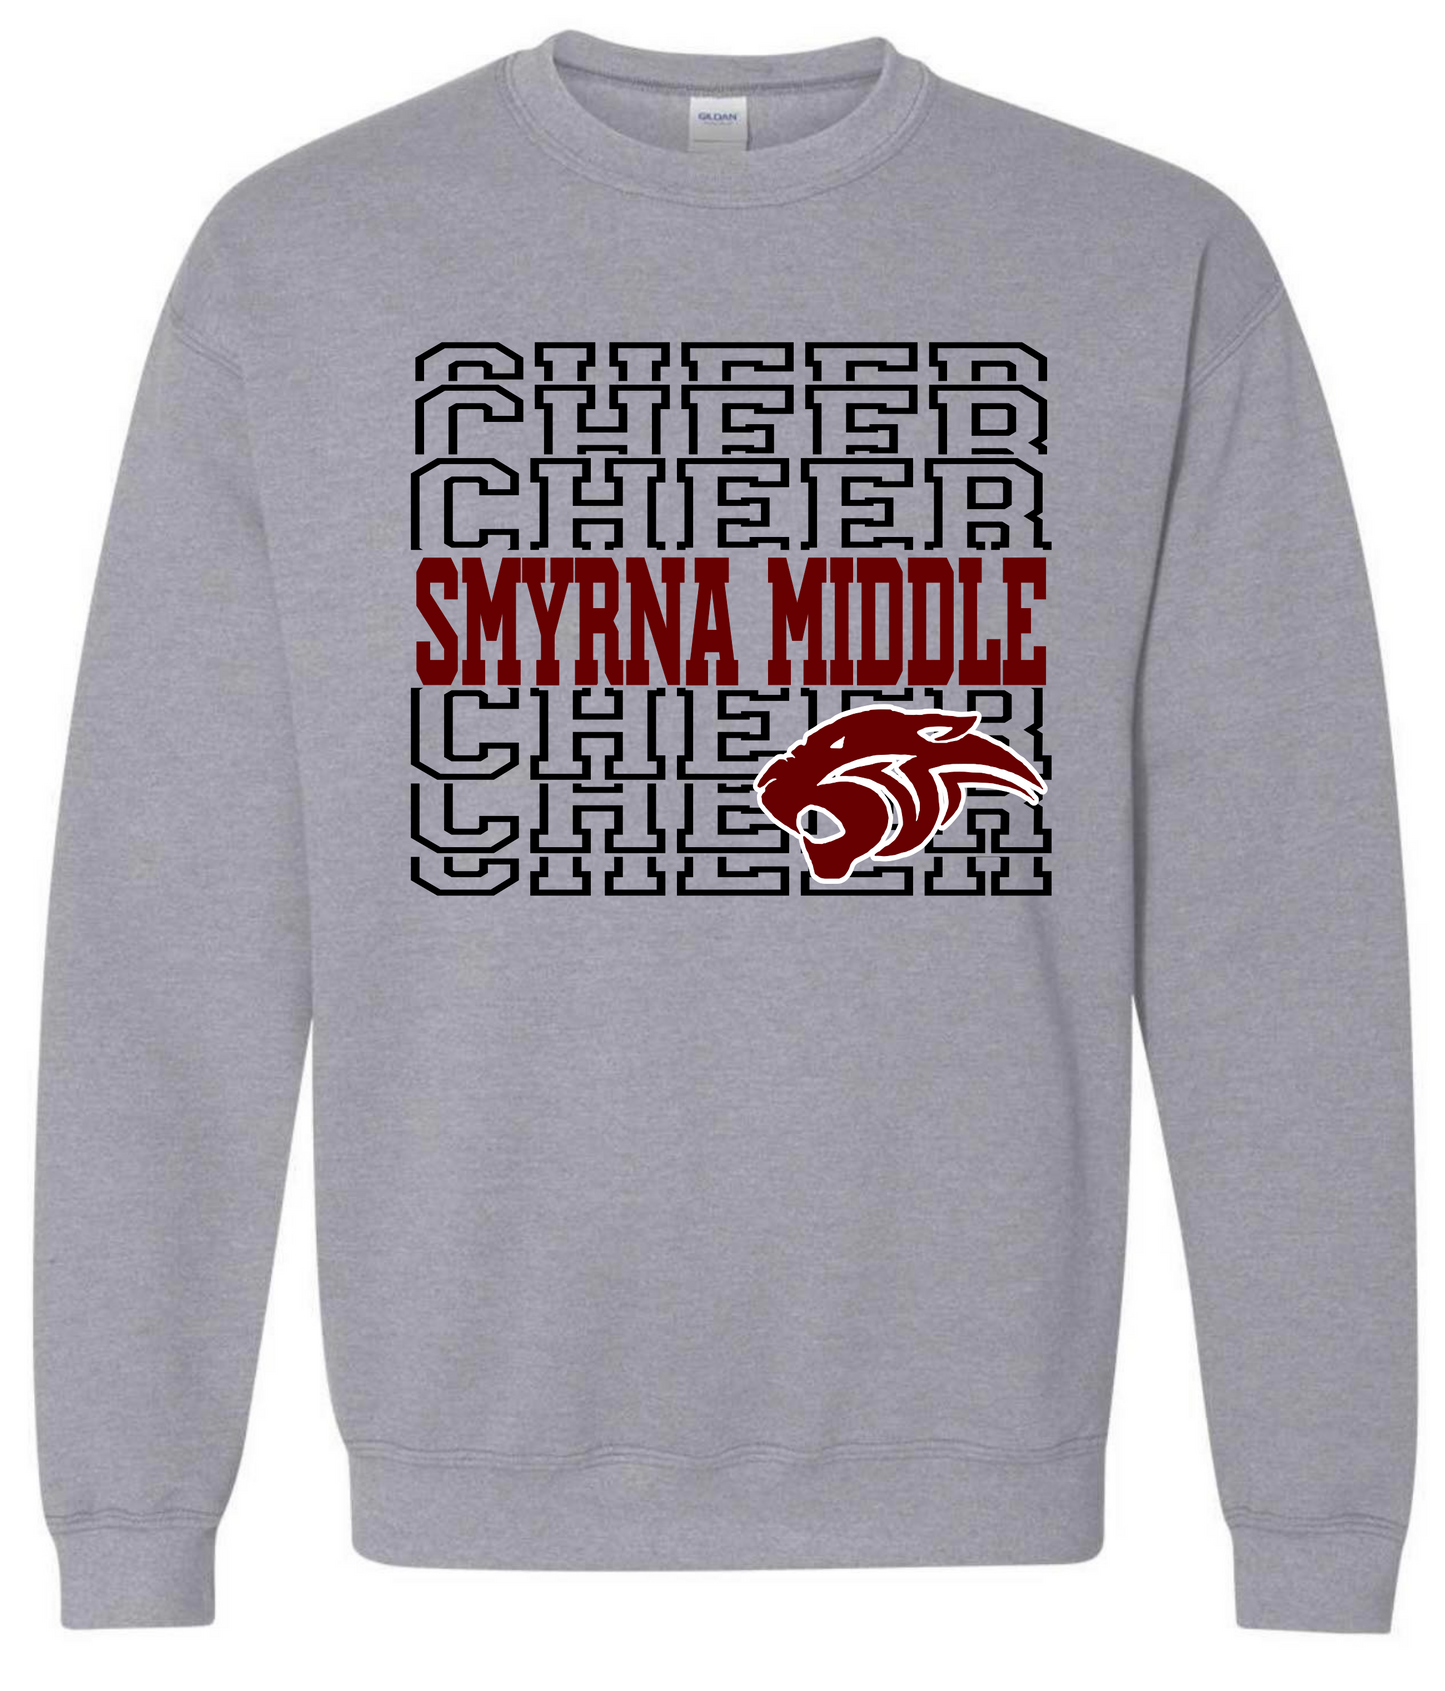 Smyrna Middle Cheer Logo Sweatshirt